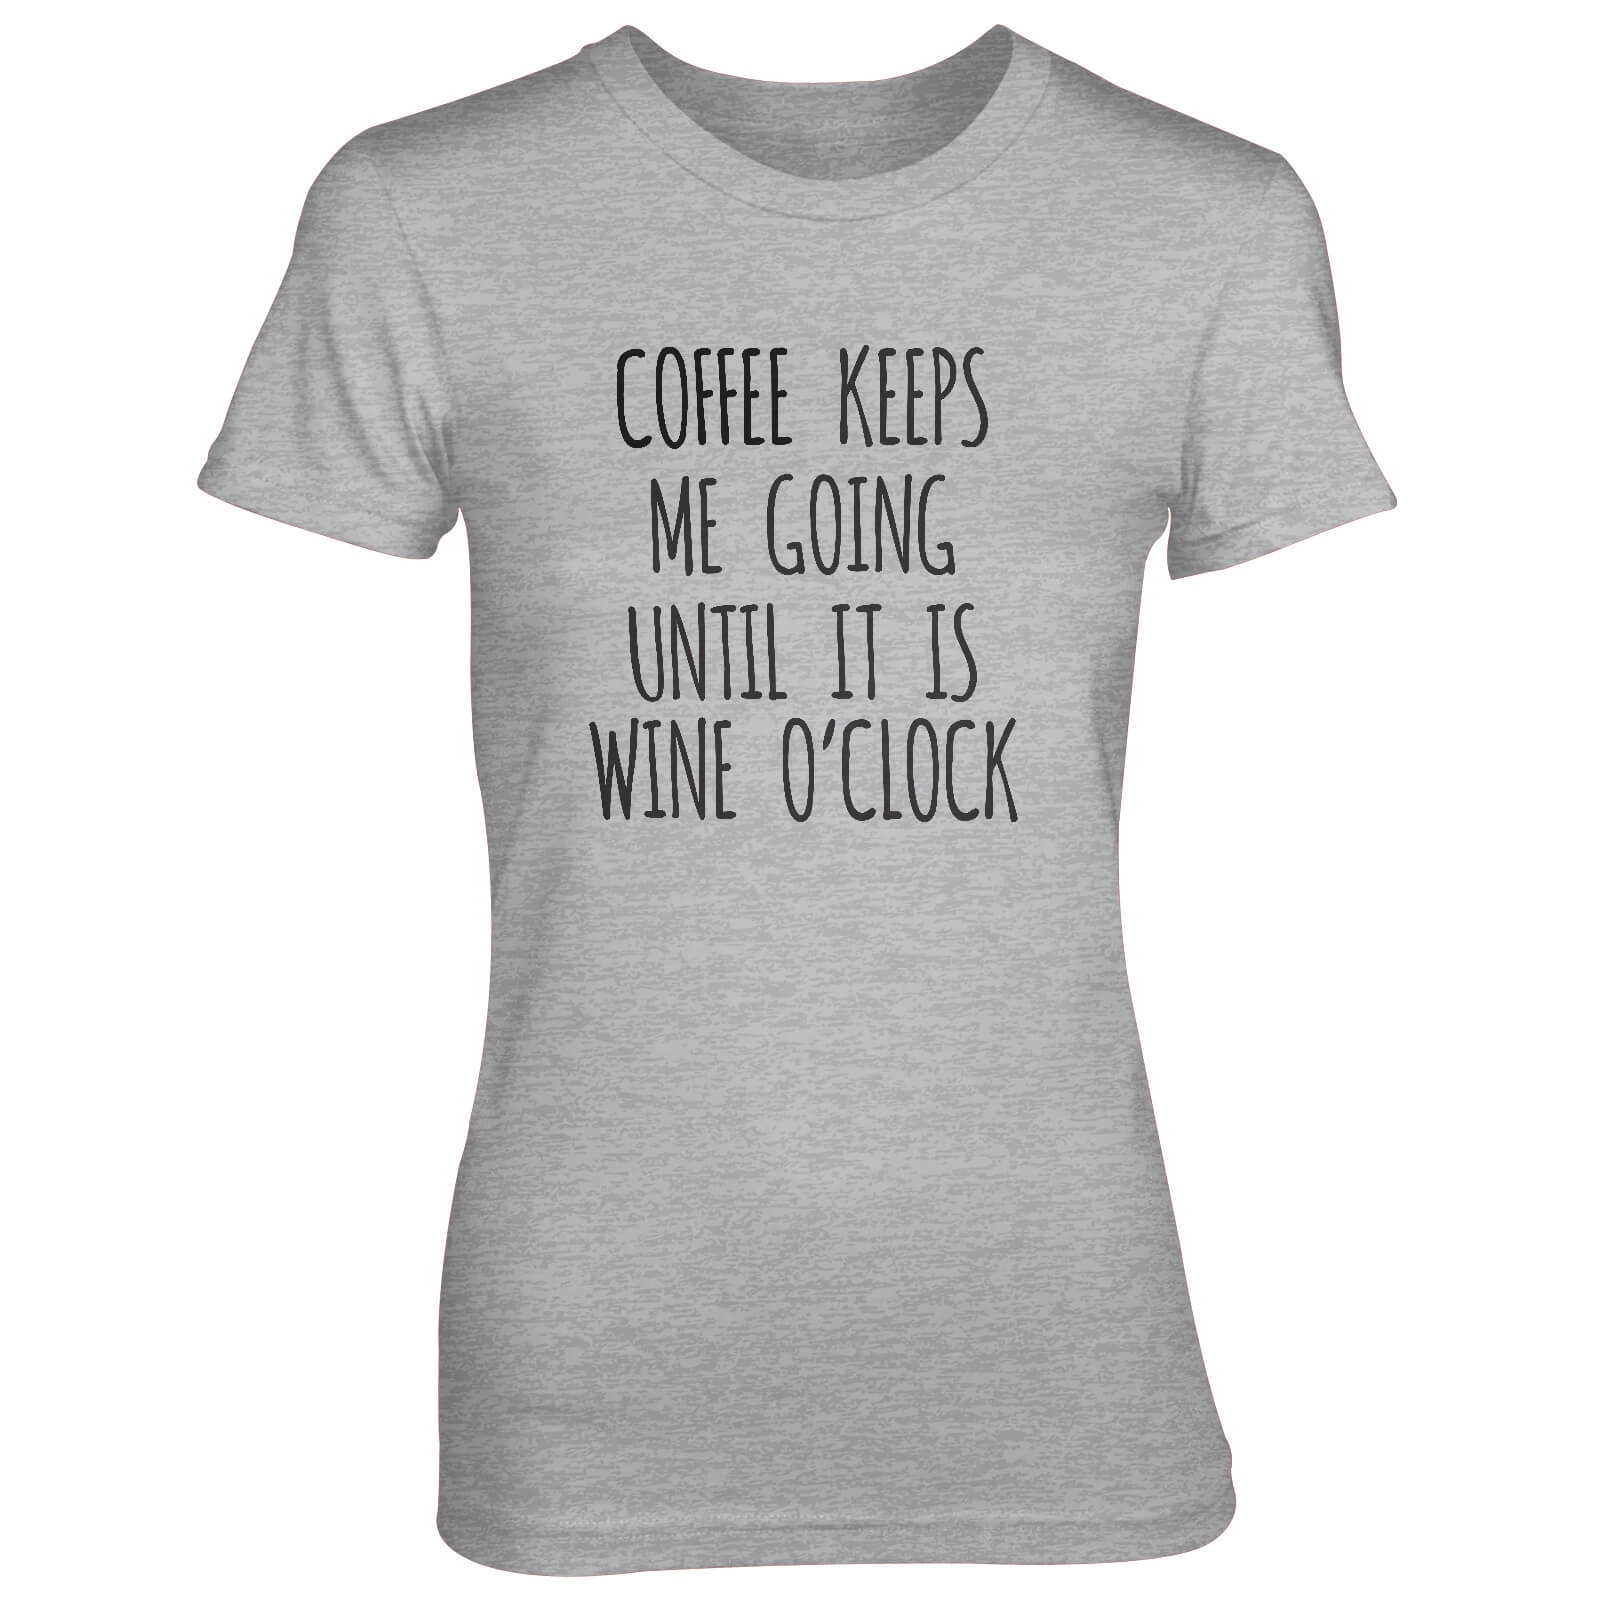 Coffee Keeps Me Going Until It's Wine O'Clock Women's Grey T-Shirt - S - Grey